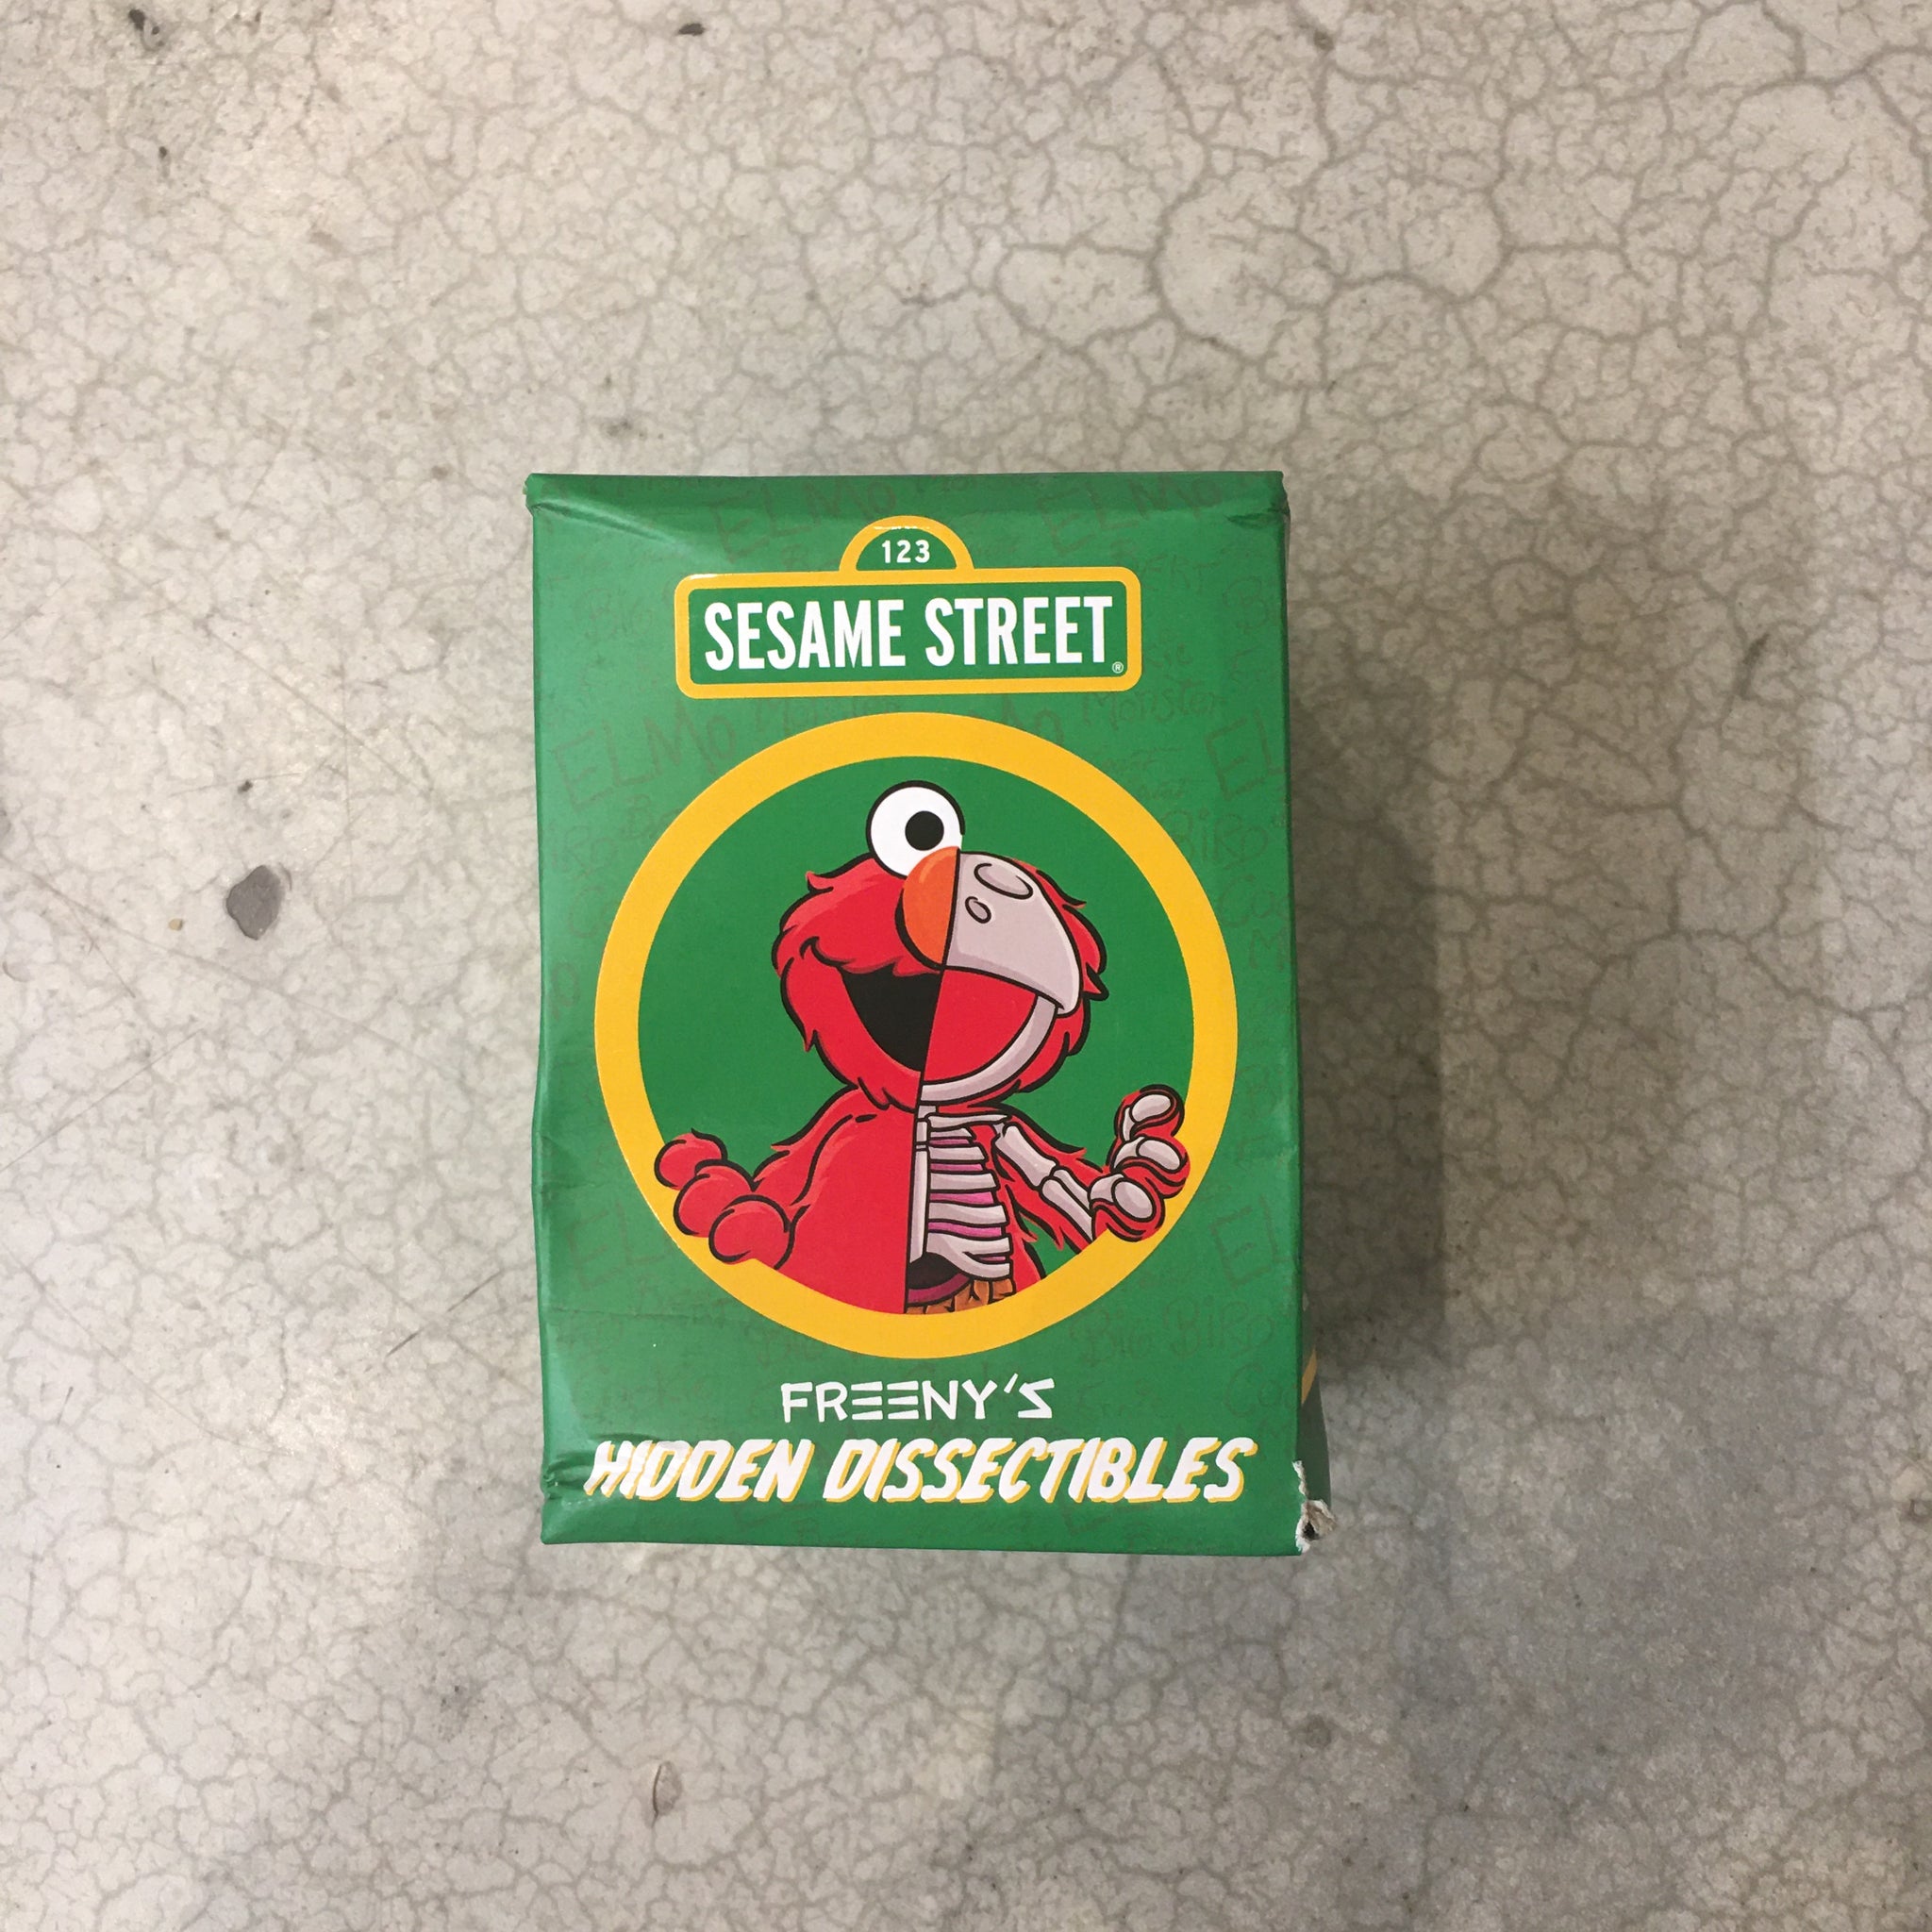 Sesame Street Blind Box by Jason Freeny - Damaged box